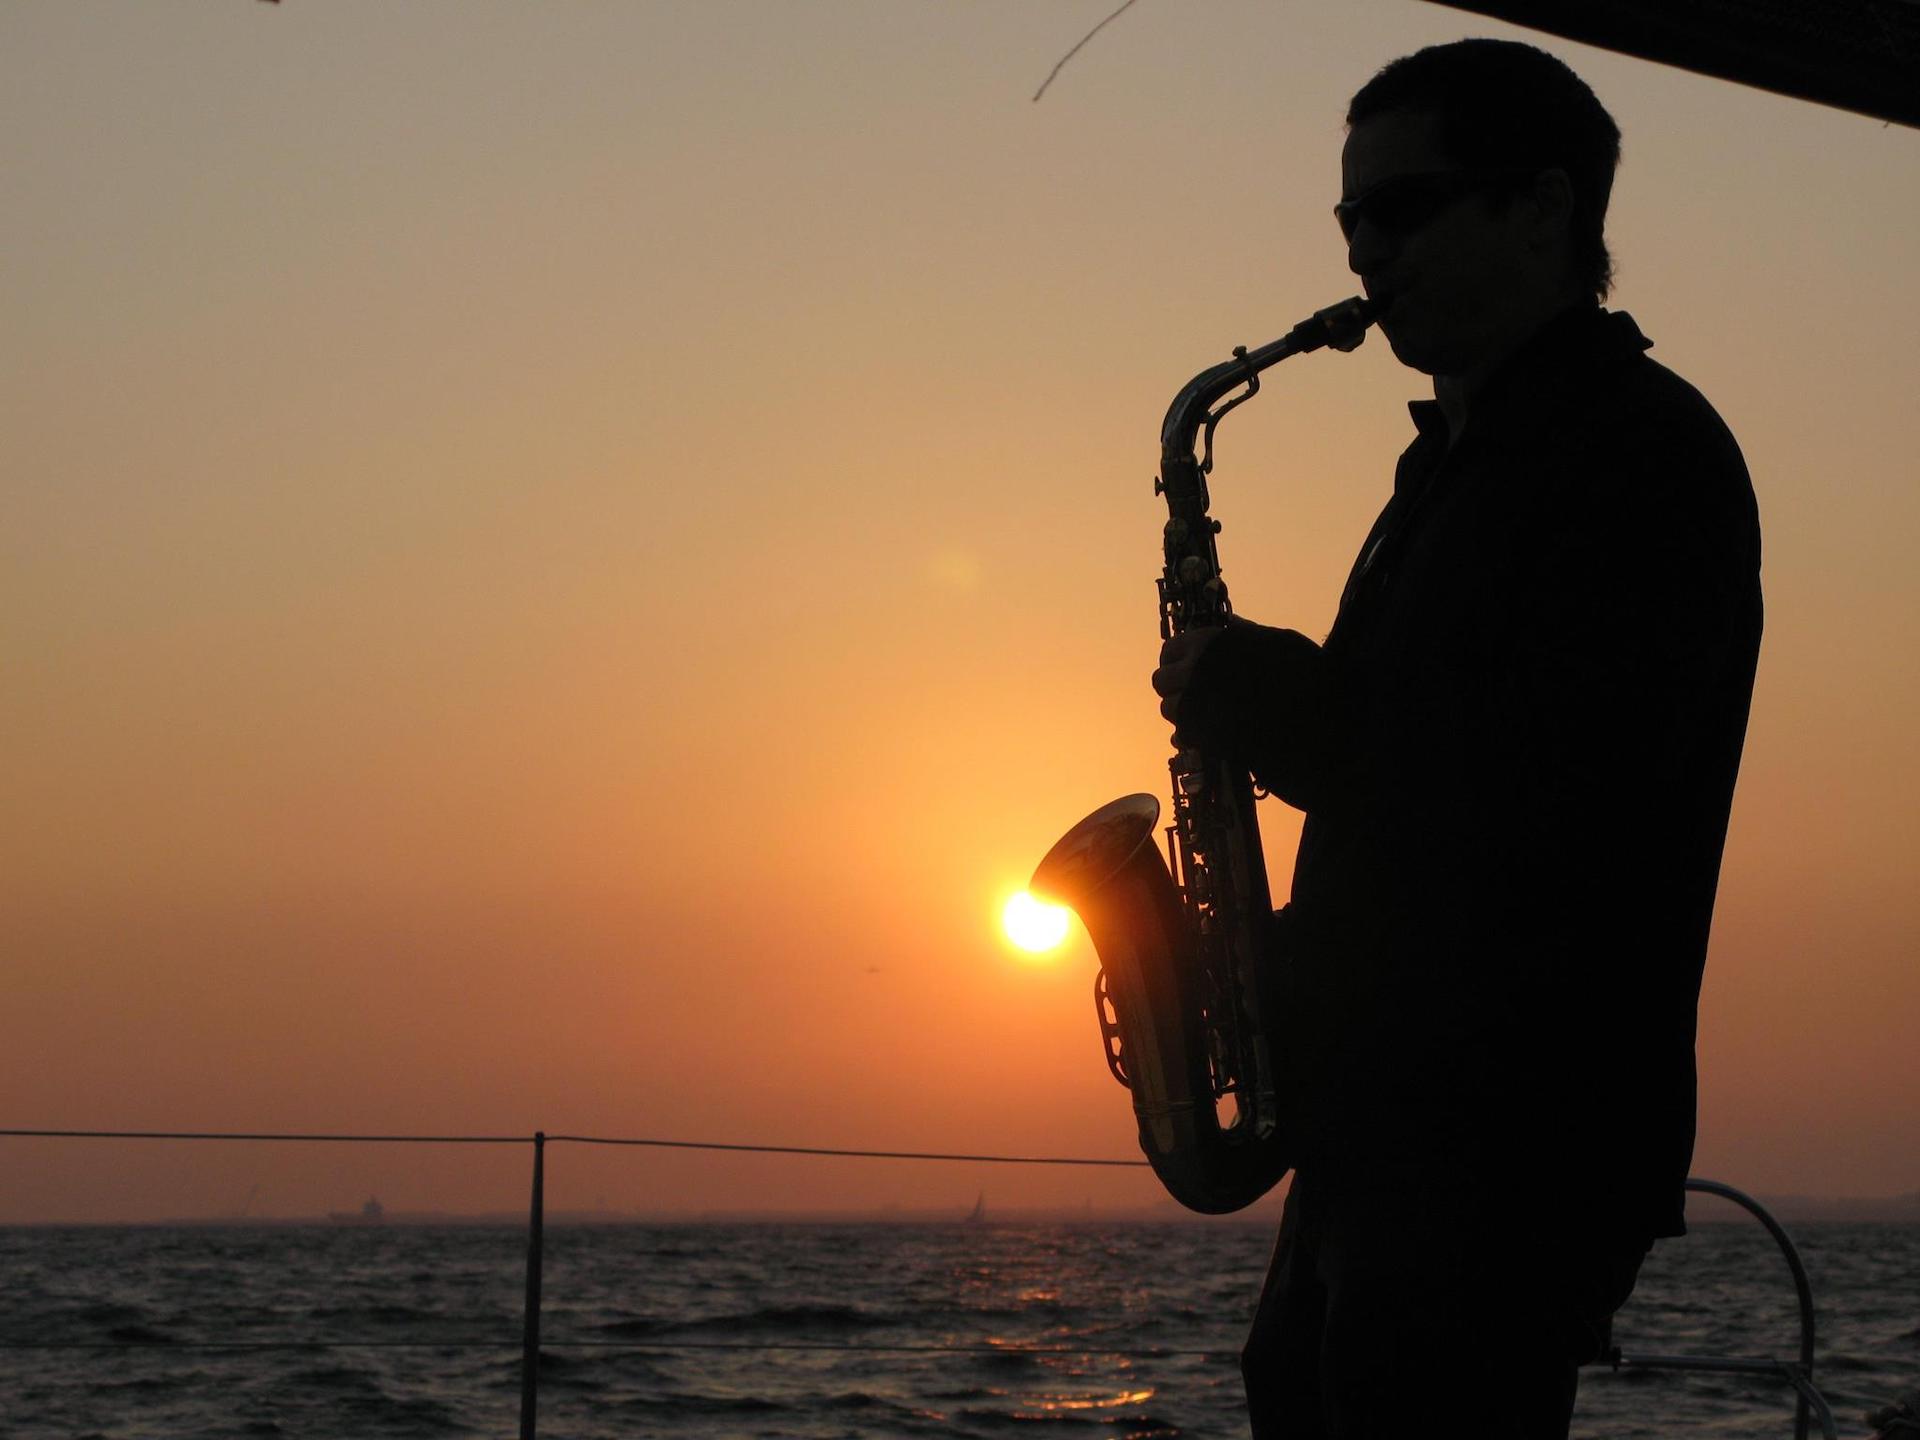 sunset jazz cruise in barcelona